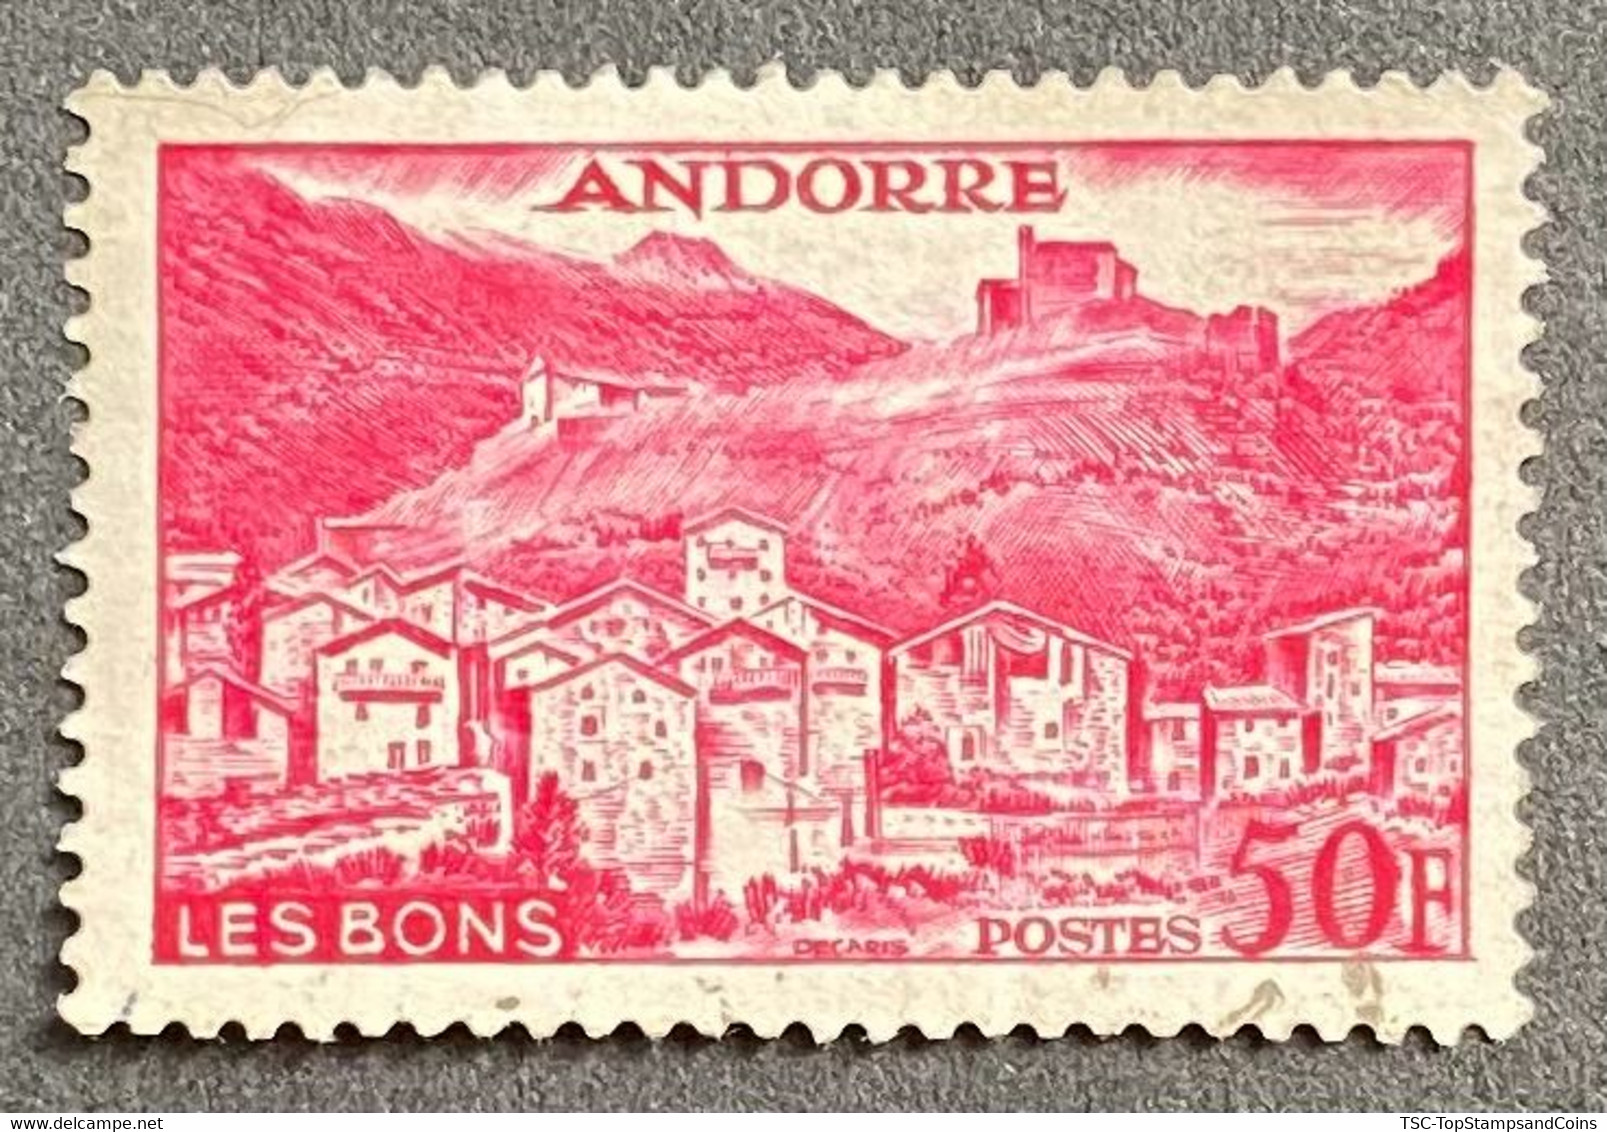 ADFR0152U - Paysages De La Principauté - 50 F Used Stamp - French Andorra - 1955 - Usati